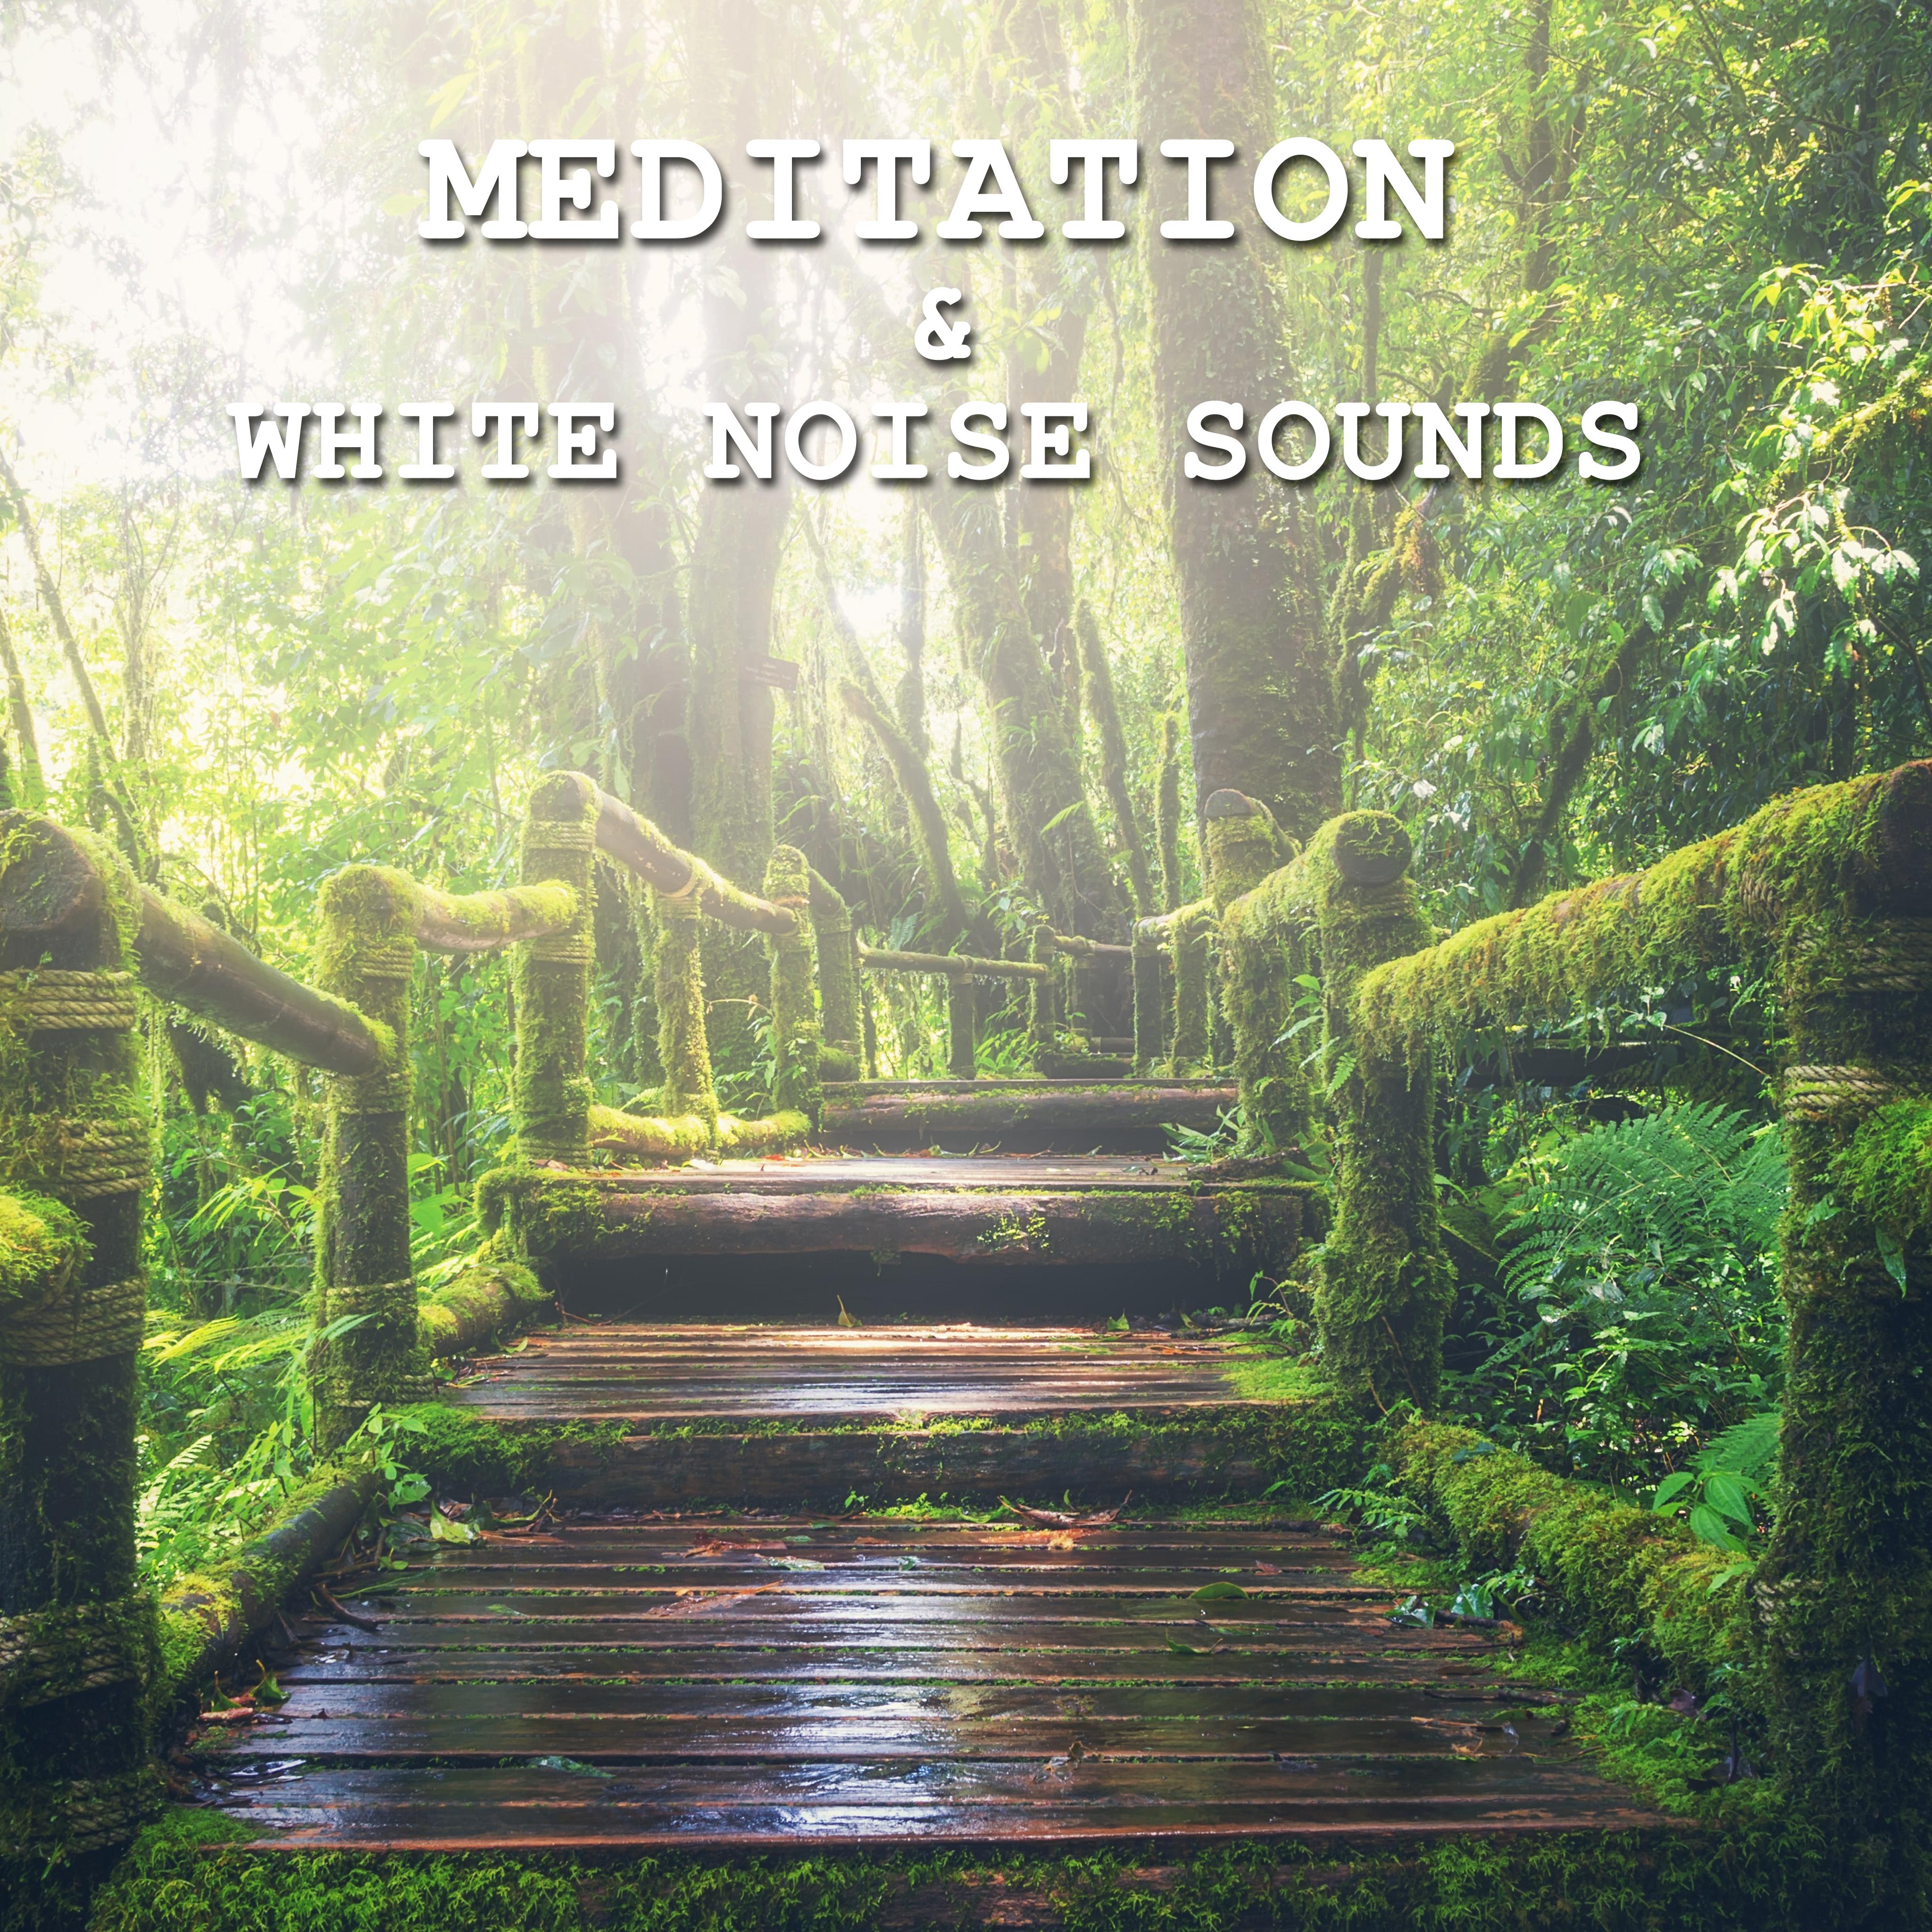 15 Meditation & White Noise Sounds